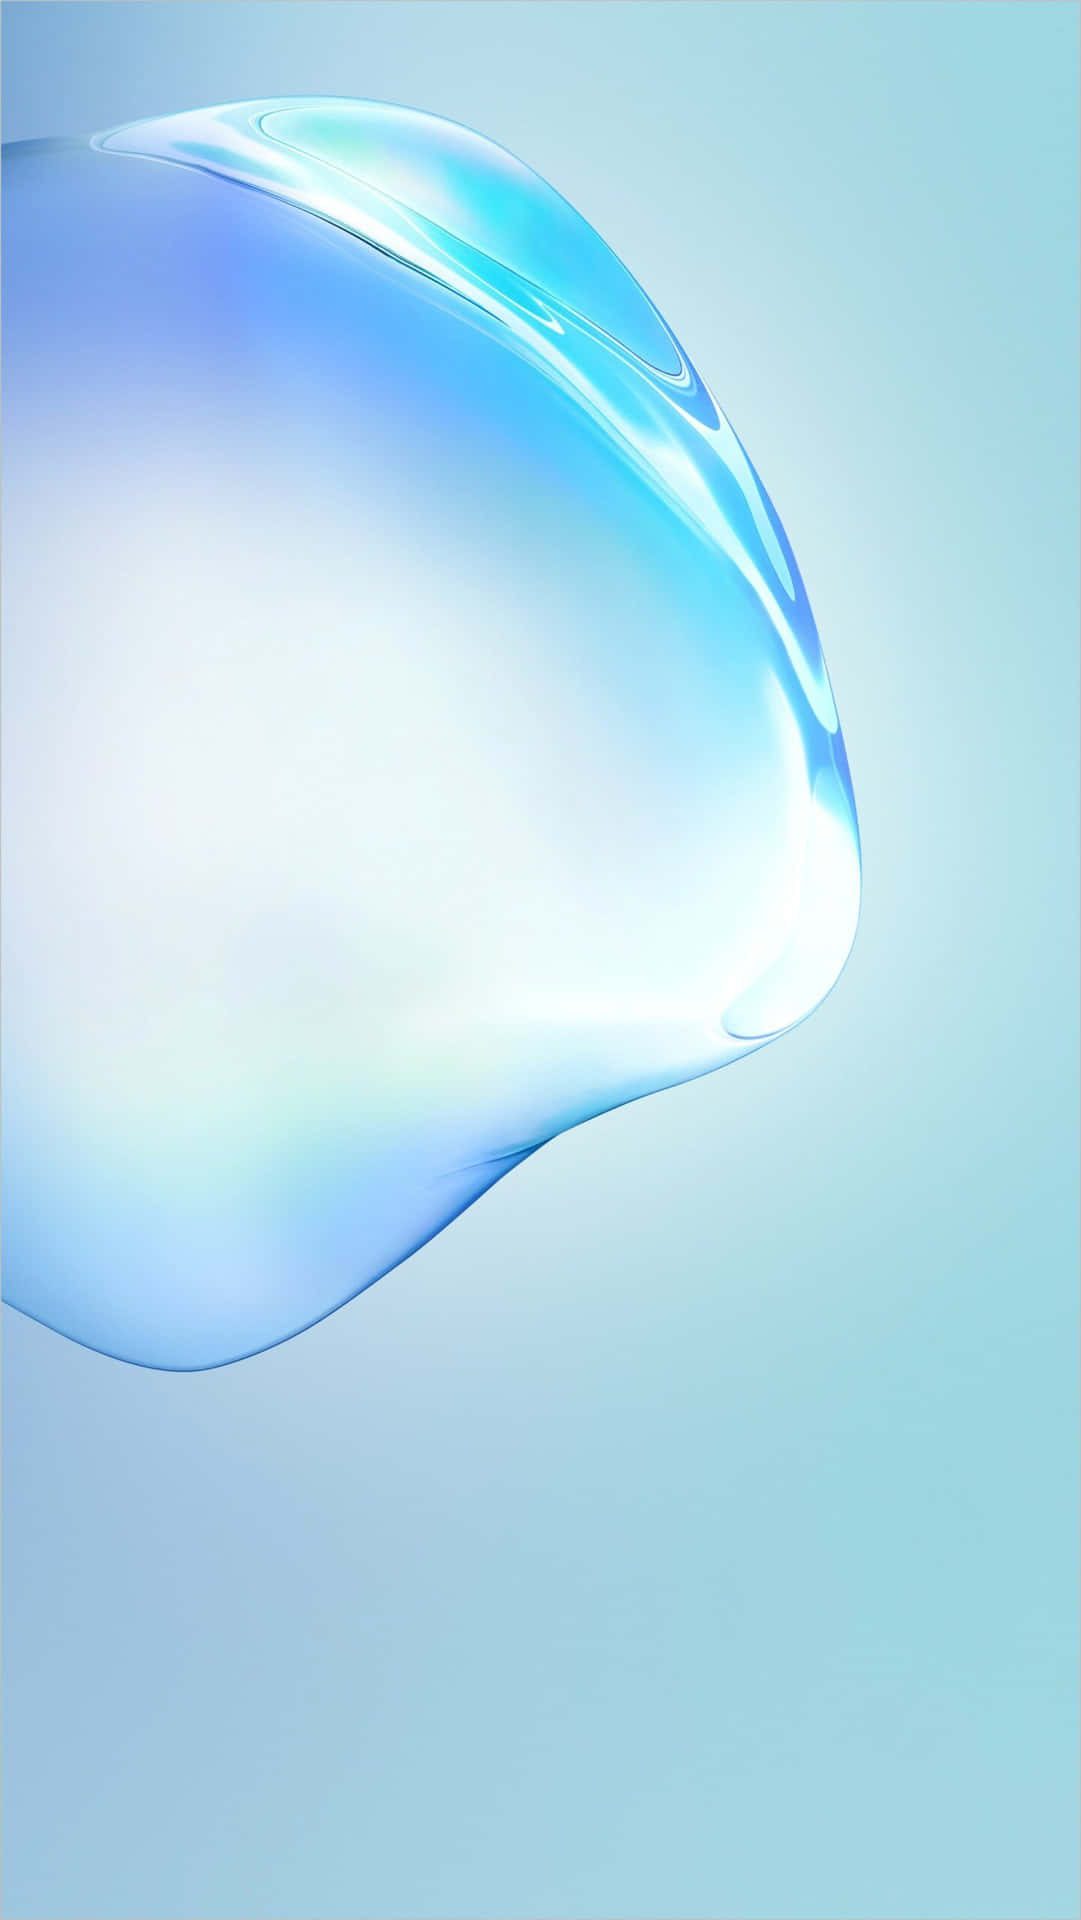 3d Water Galaxy Note 4 Wallpaper